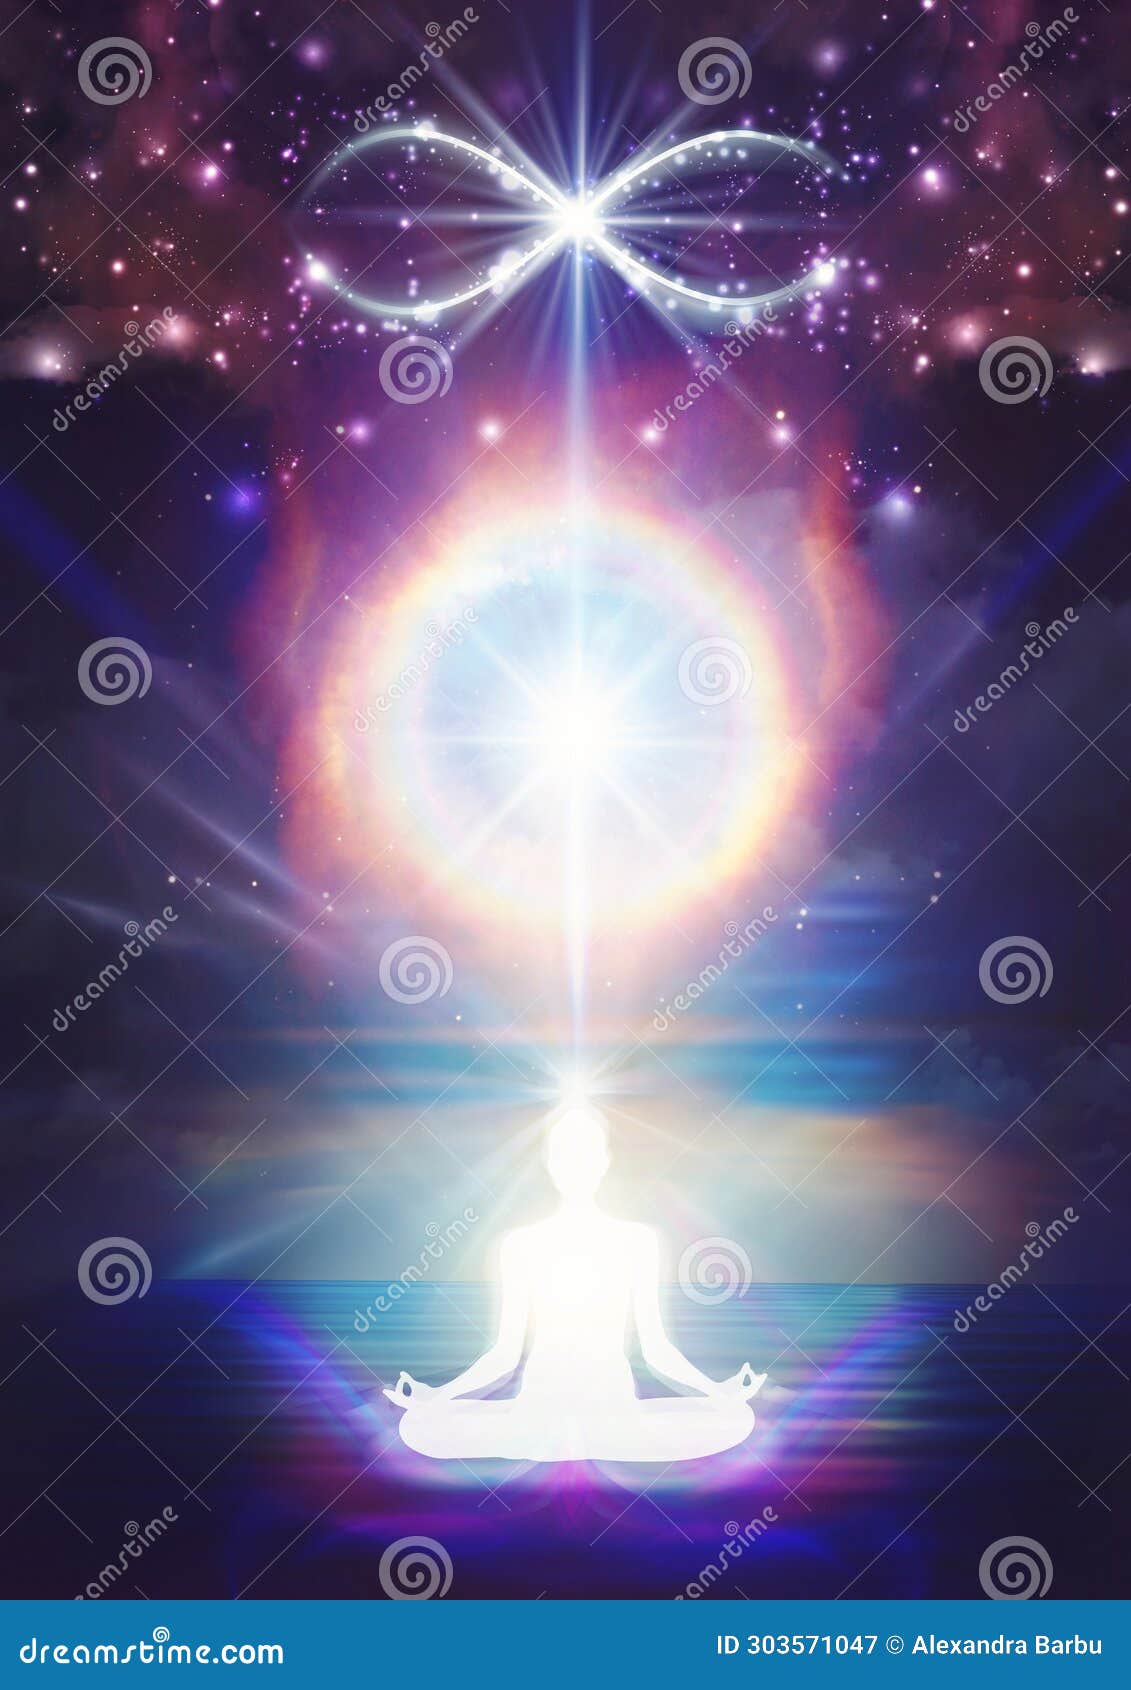 soul journey to divine, spiritual energy healing power, conscience awakening, portal meditation, expansion